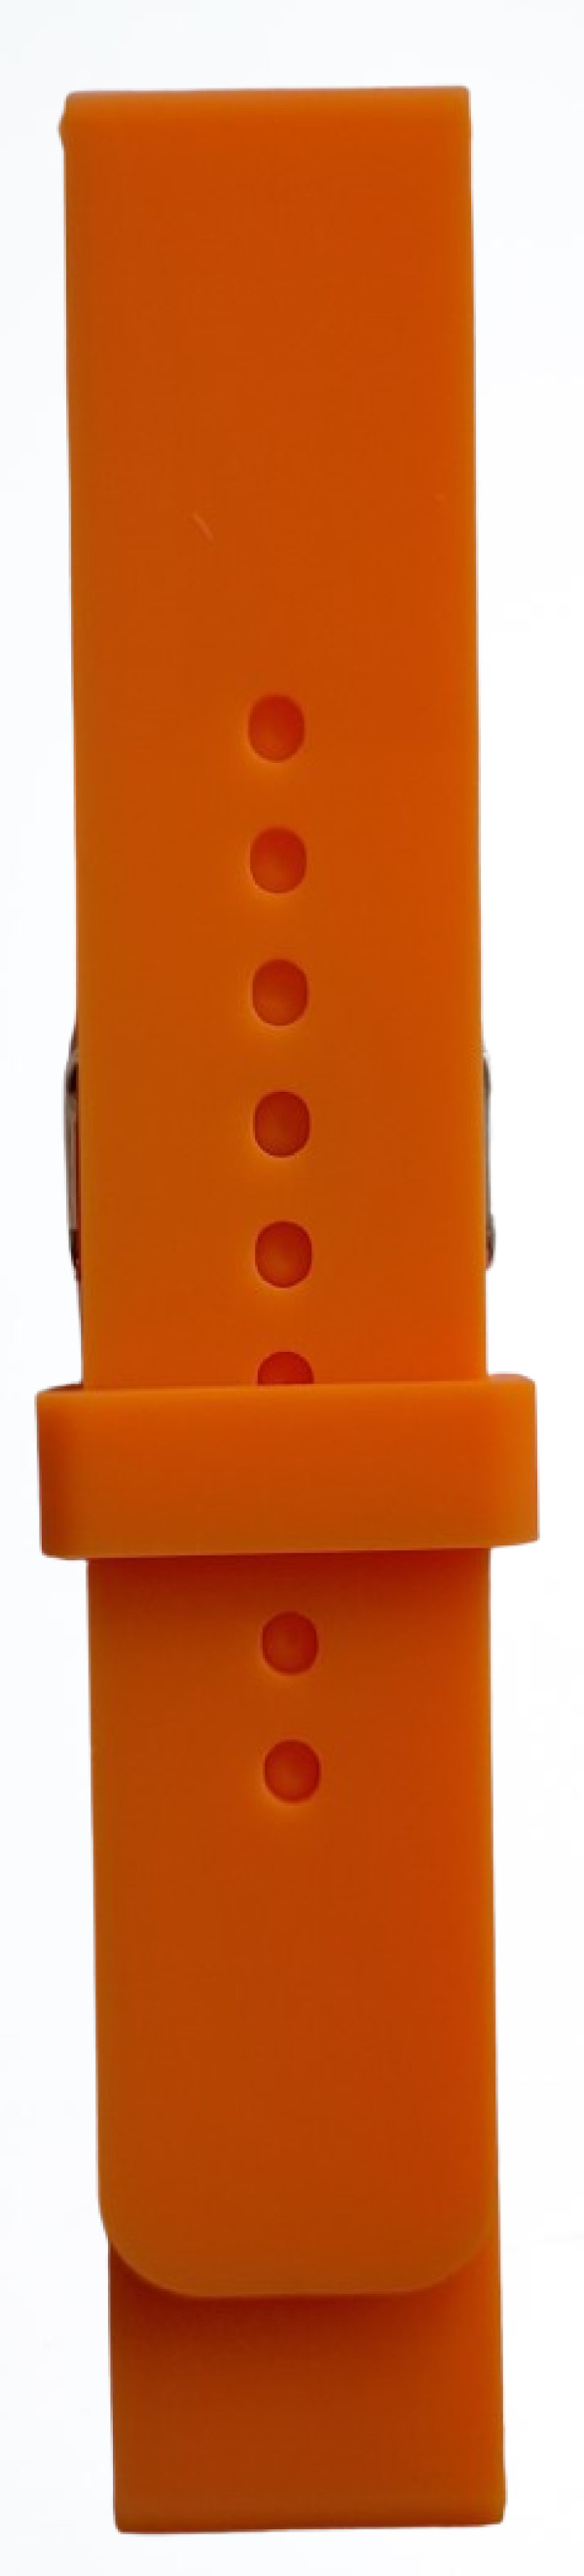 Silikonski kaiš - SK 12.04 Narandžasta boja 12mm